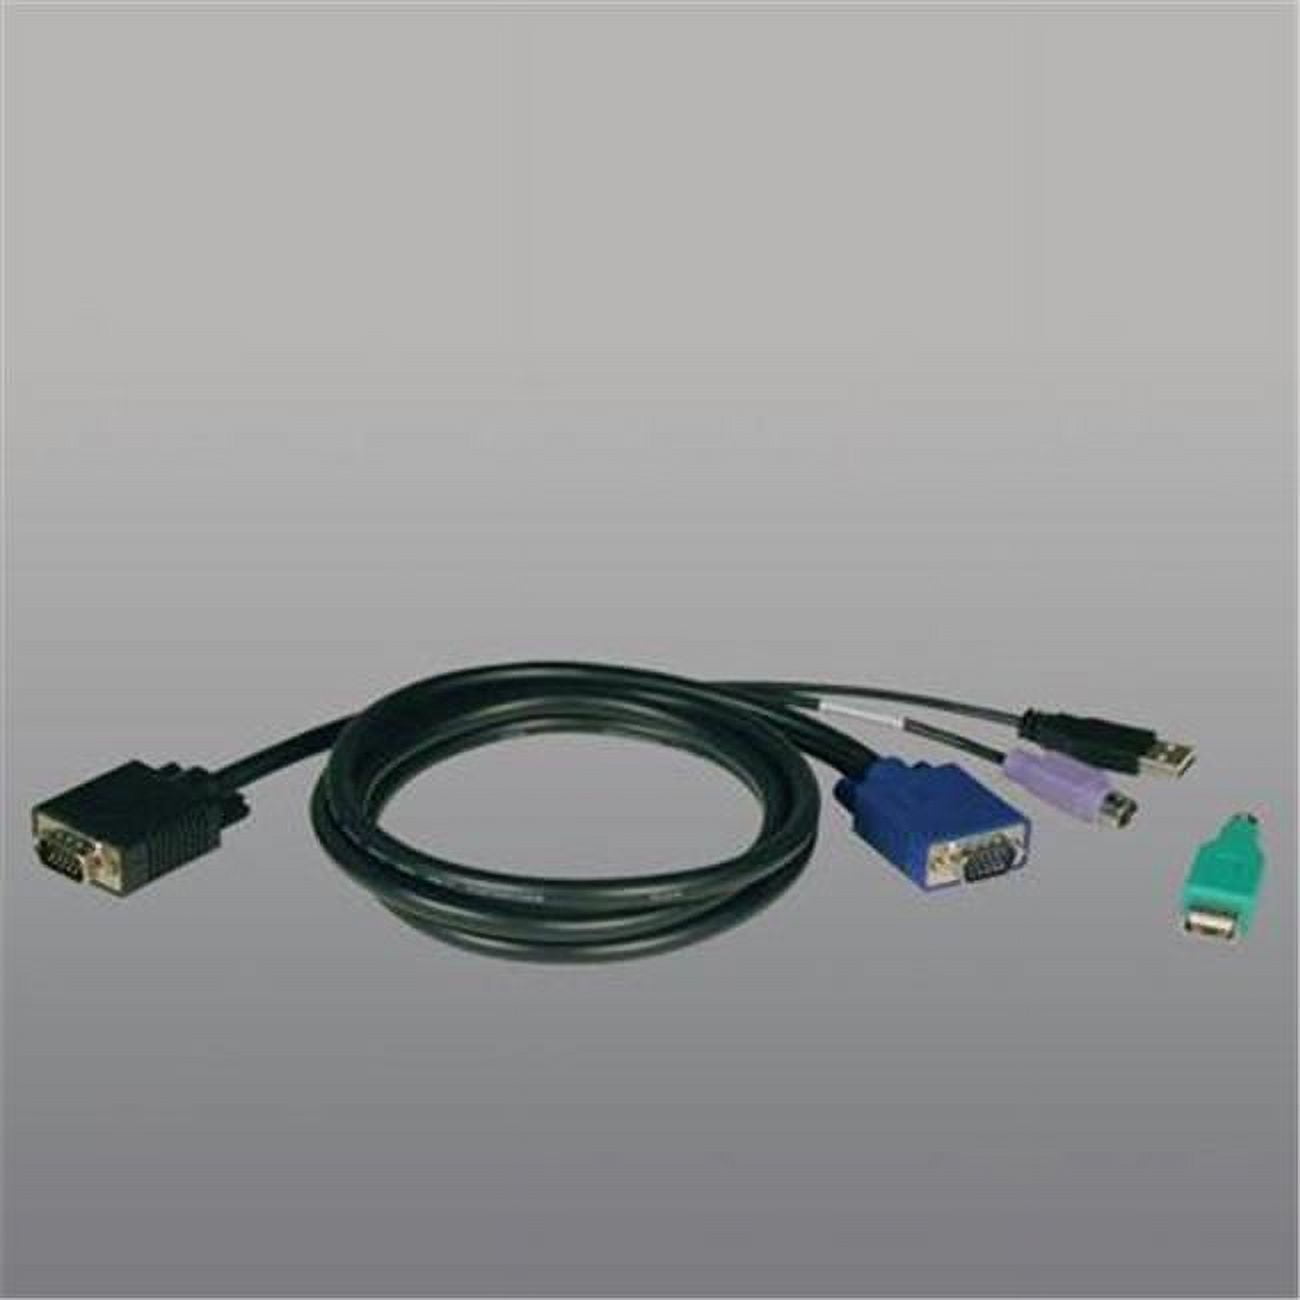 Tripplite P780-006 6 Foot PS2-USB KVM Cable Kit - Walmart.com